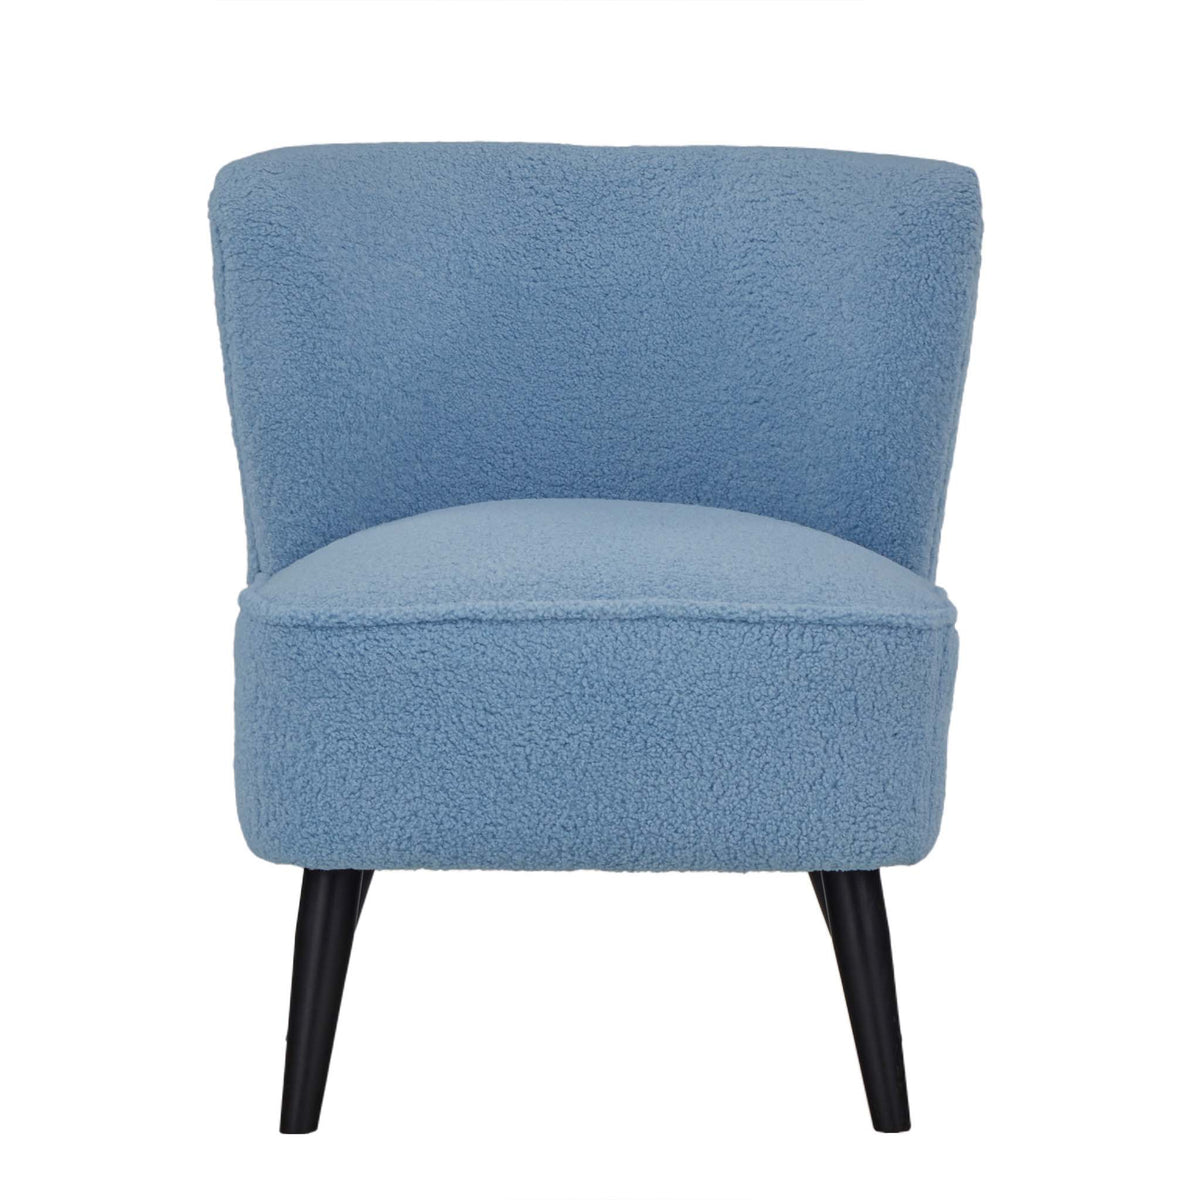 Malmesbury Teddy Accent Chair - Sky Blue